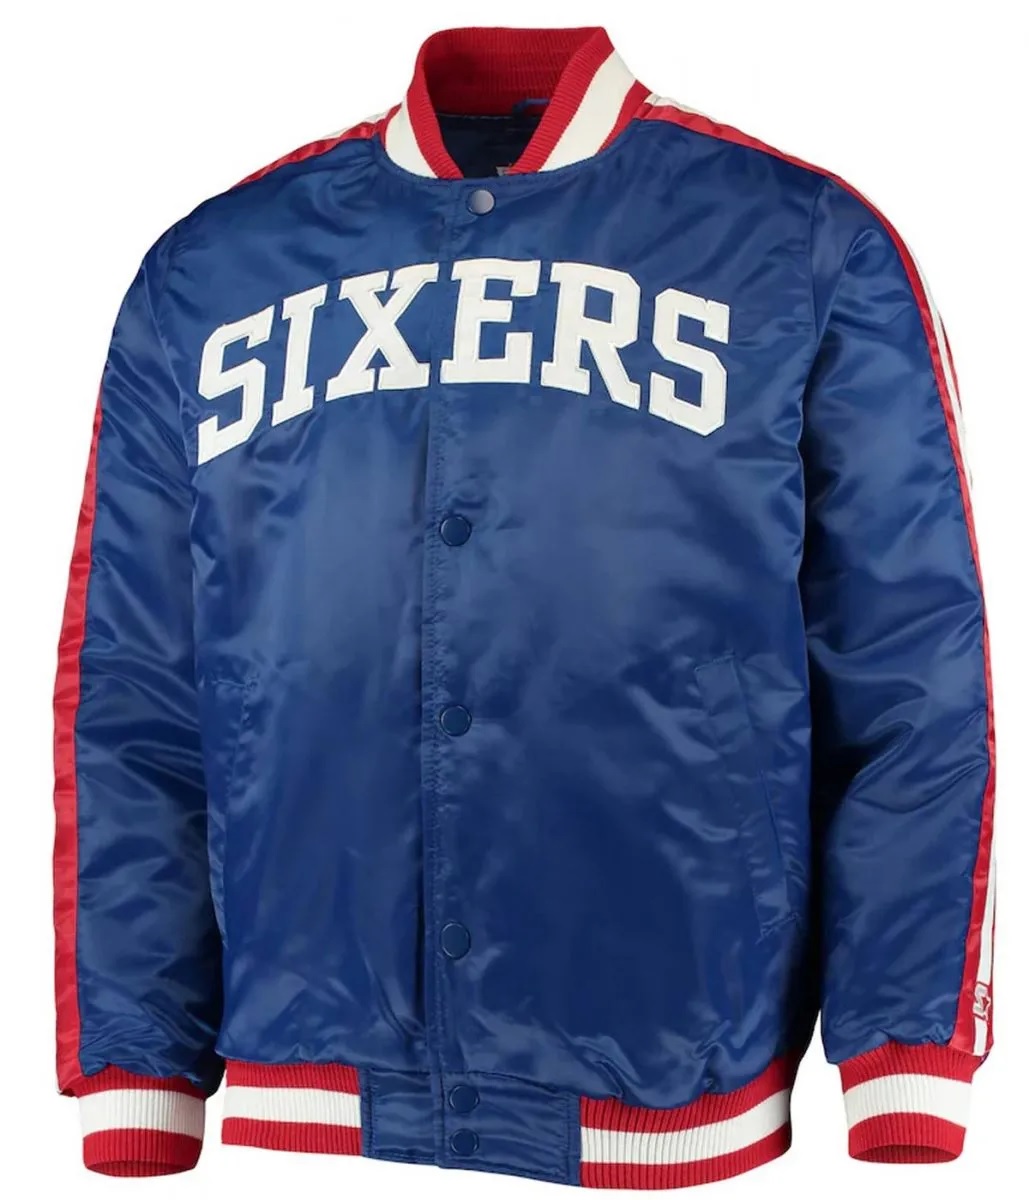 The Offensive Philadelphia 76ers Varsity Royal Blue Satin Full-Snap Jacket